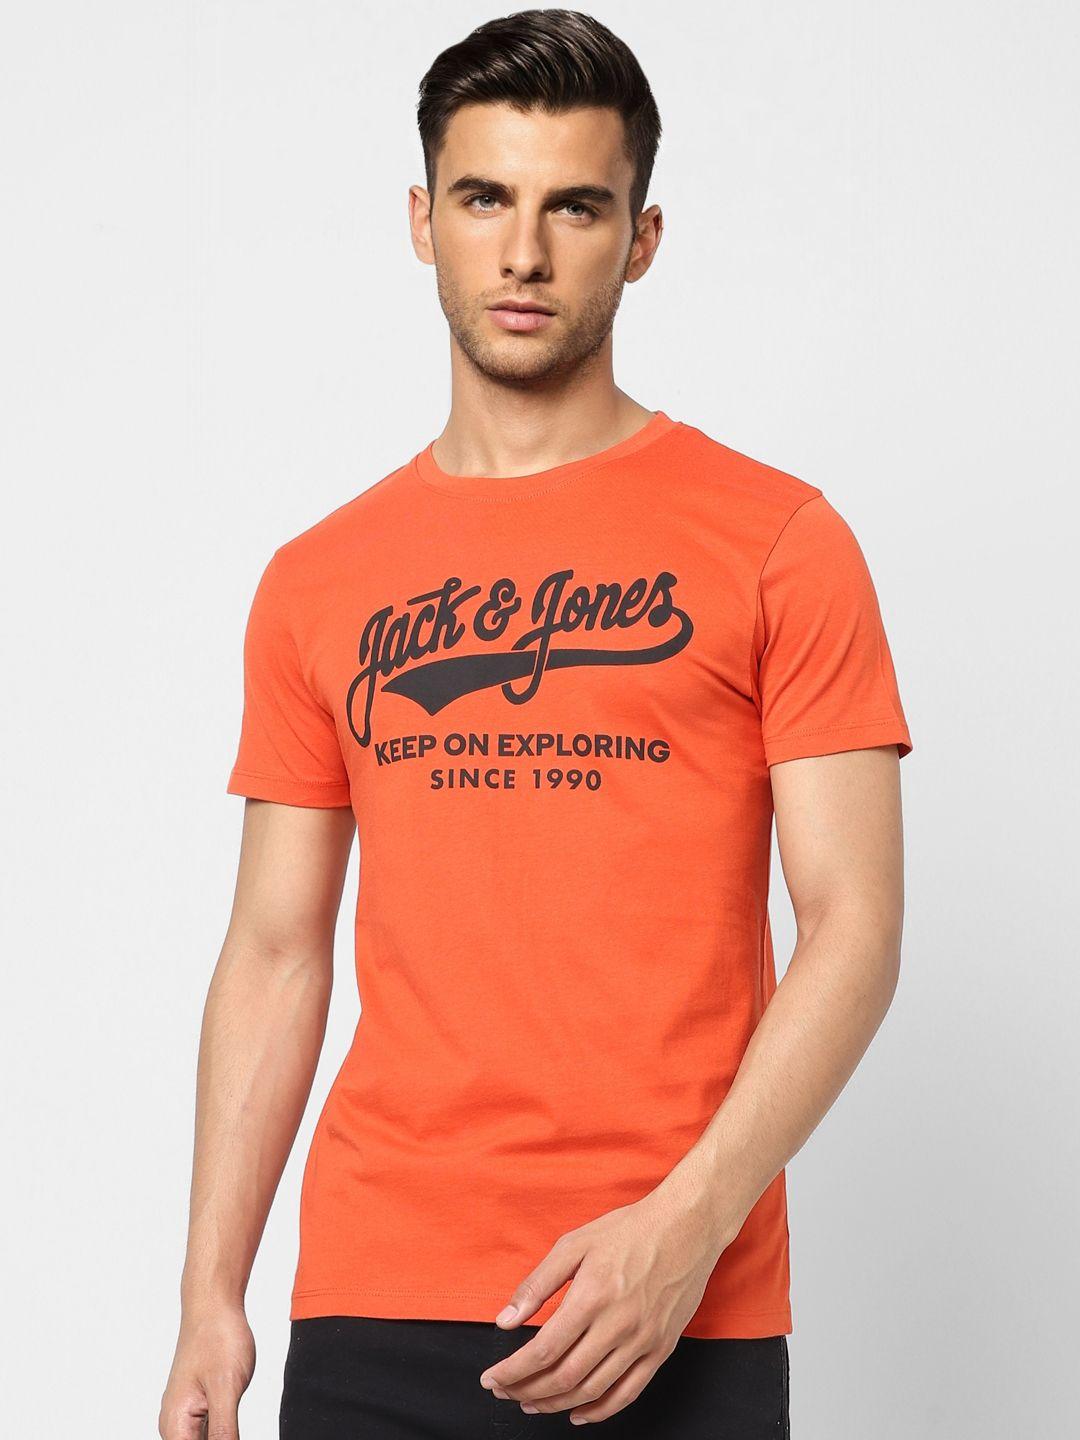 jack-&-jones-men-red-brand-logo-printed-pure-cotton-slim-fit-t-shirt